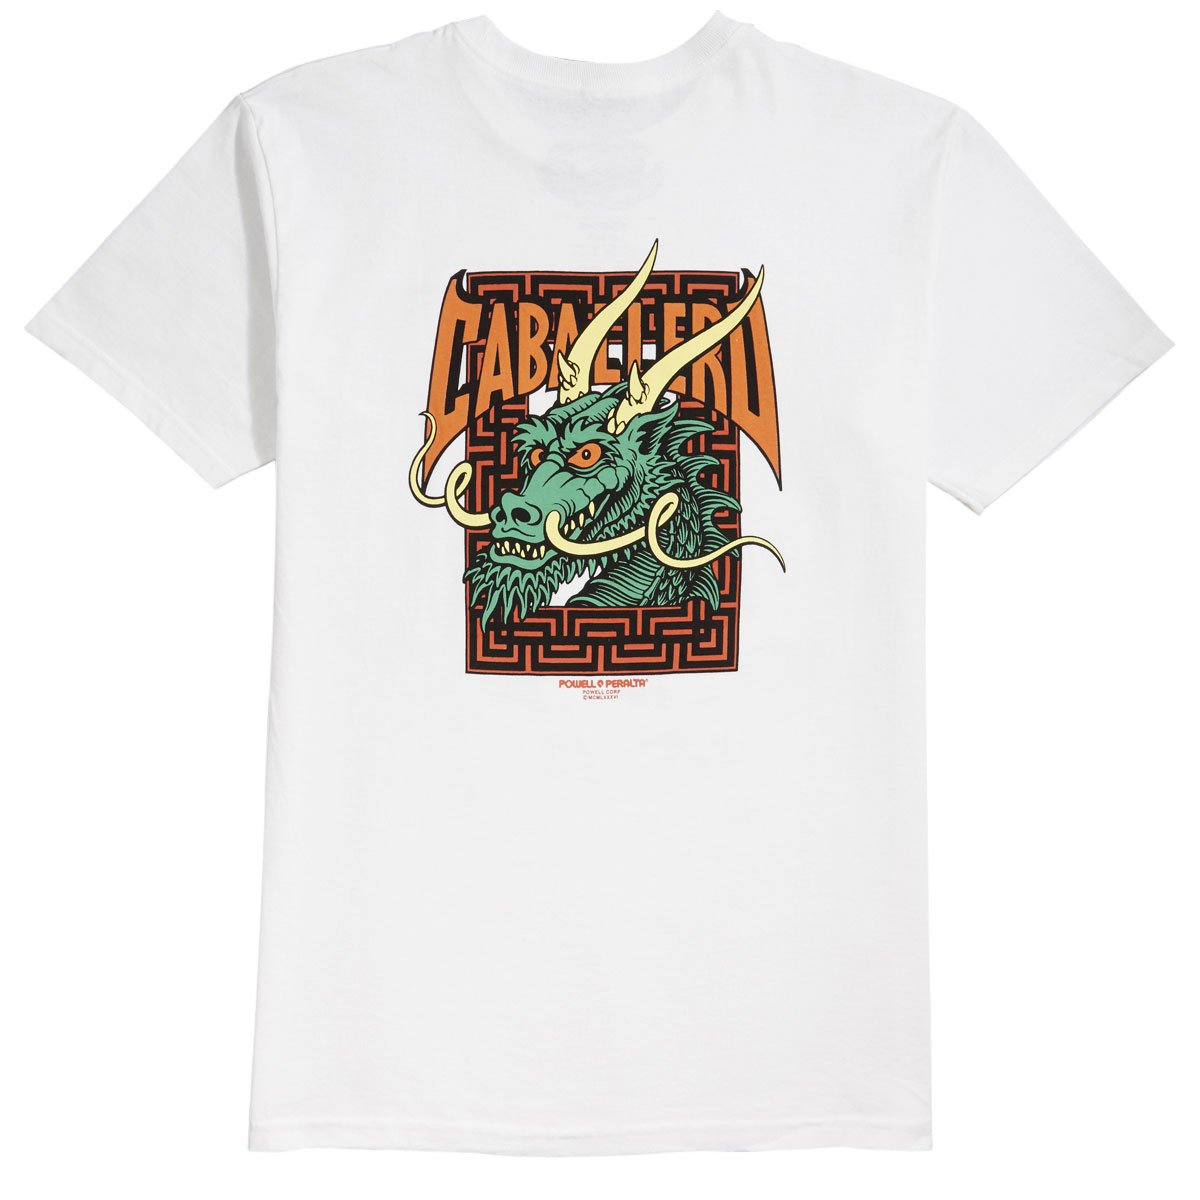 Powell-Peralta Caballero Street Dragon T-Shirt - White image 1